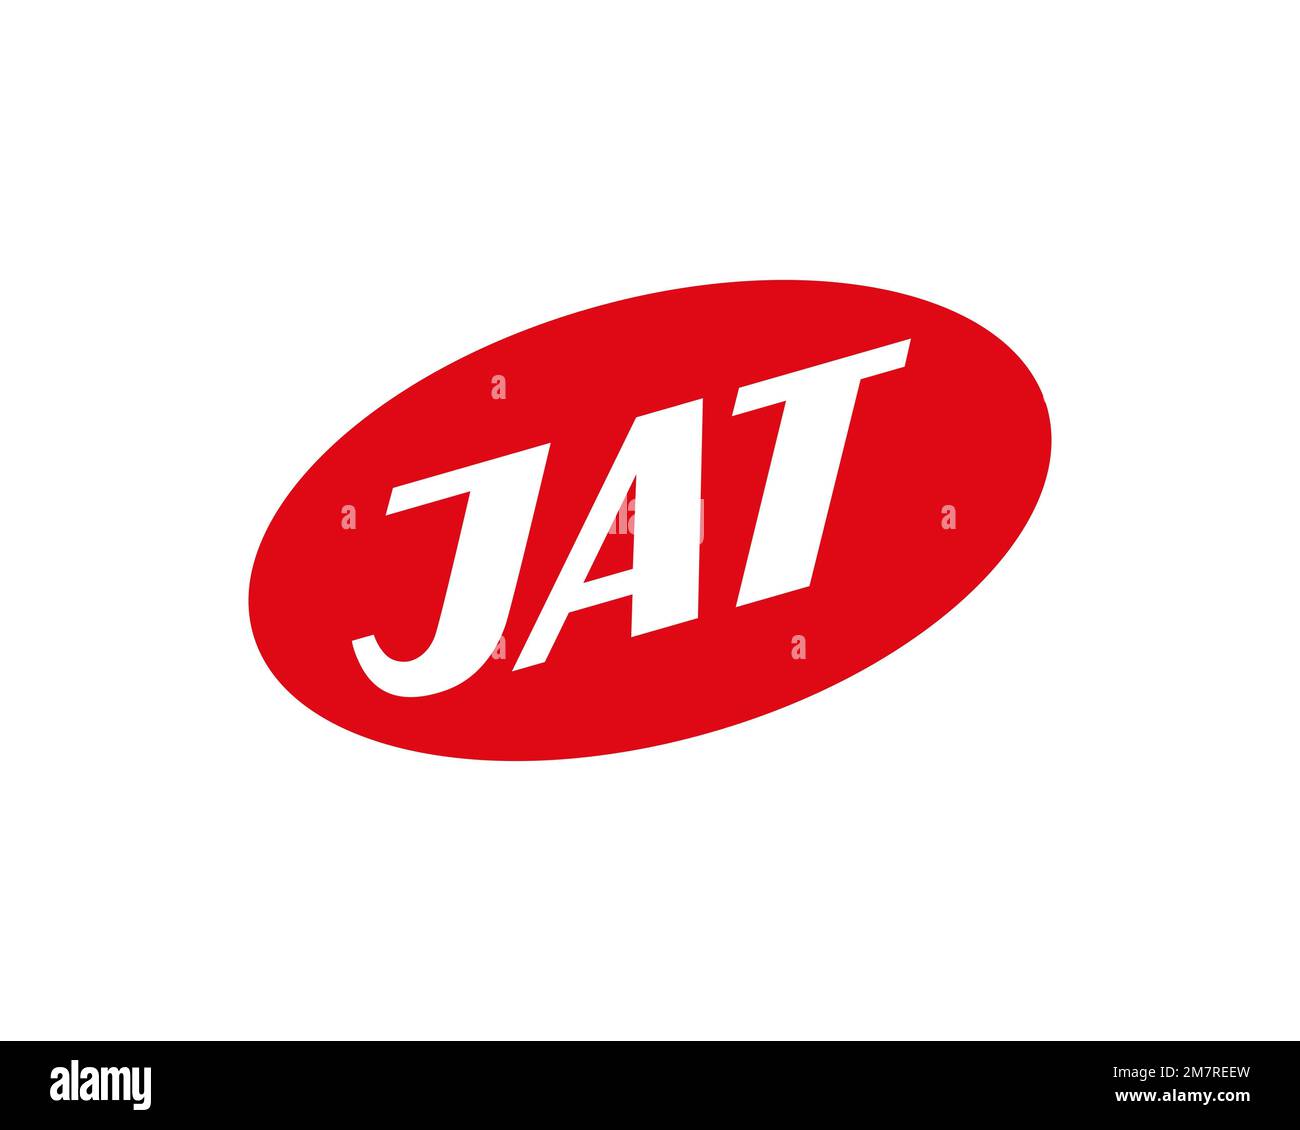 Jat Airways, logo ruotato, sfondo bianco Foto Stock